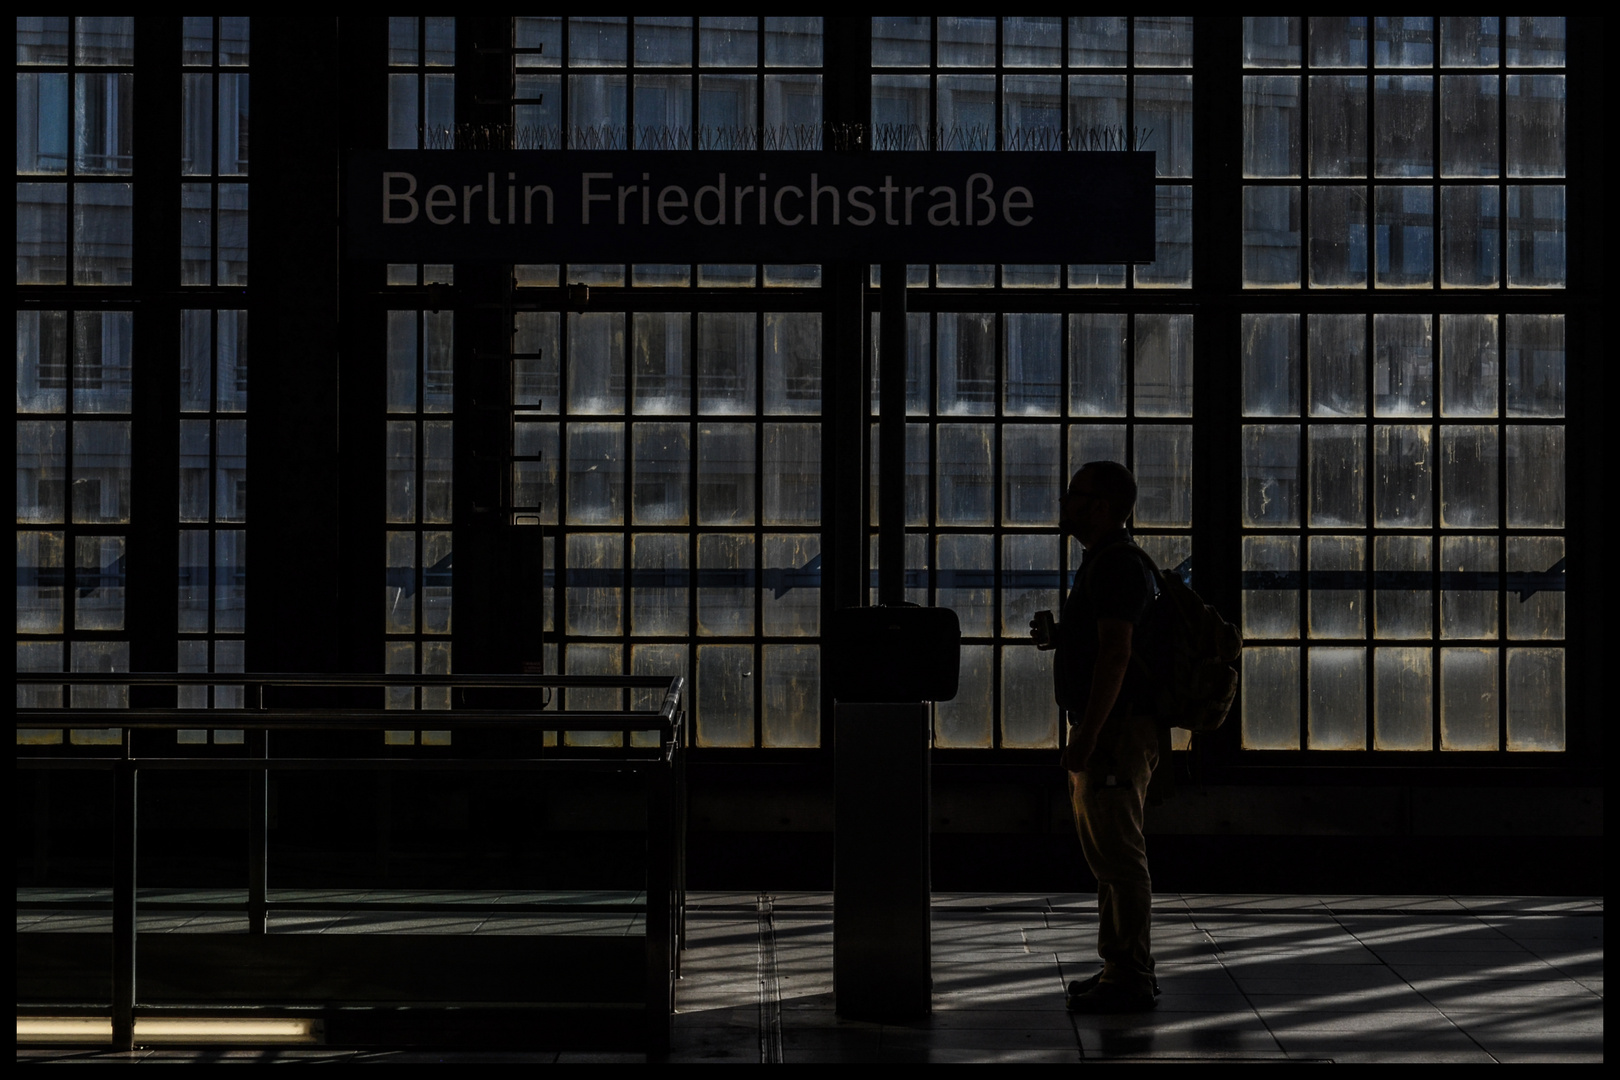 B-Friedrichstrasse - Waiting (reload)